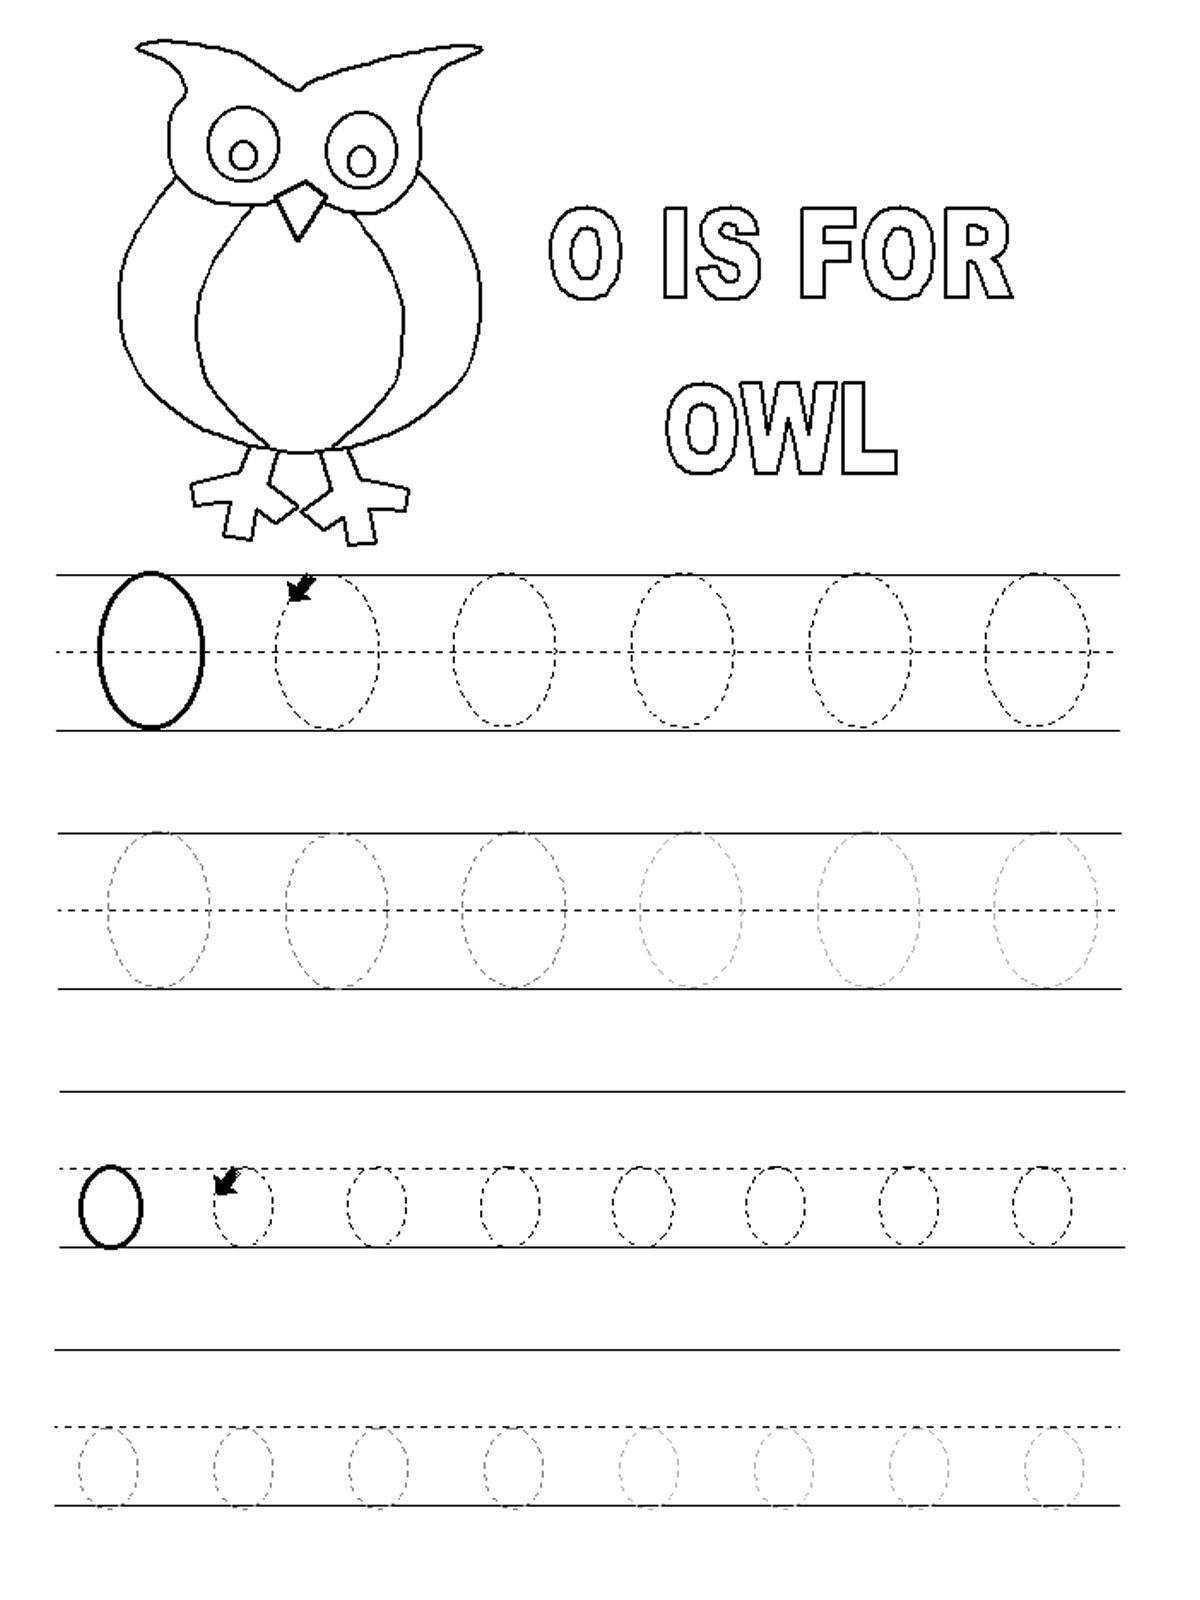 Letter O Worksheets For Preschool | Letter O Worksheets with Trace Letter O Worksheets Preschool